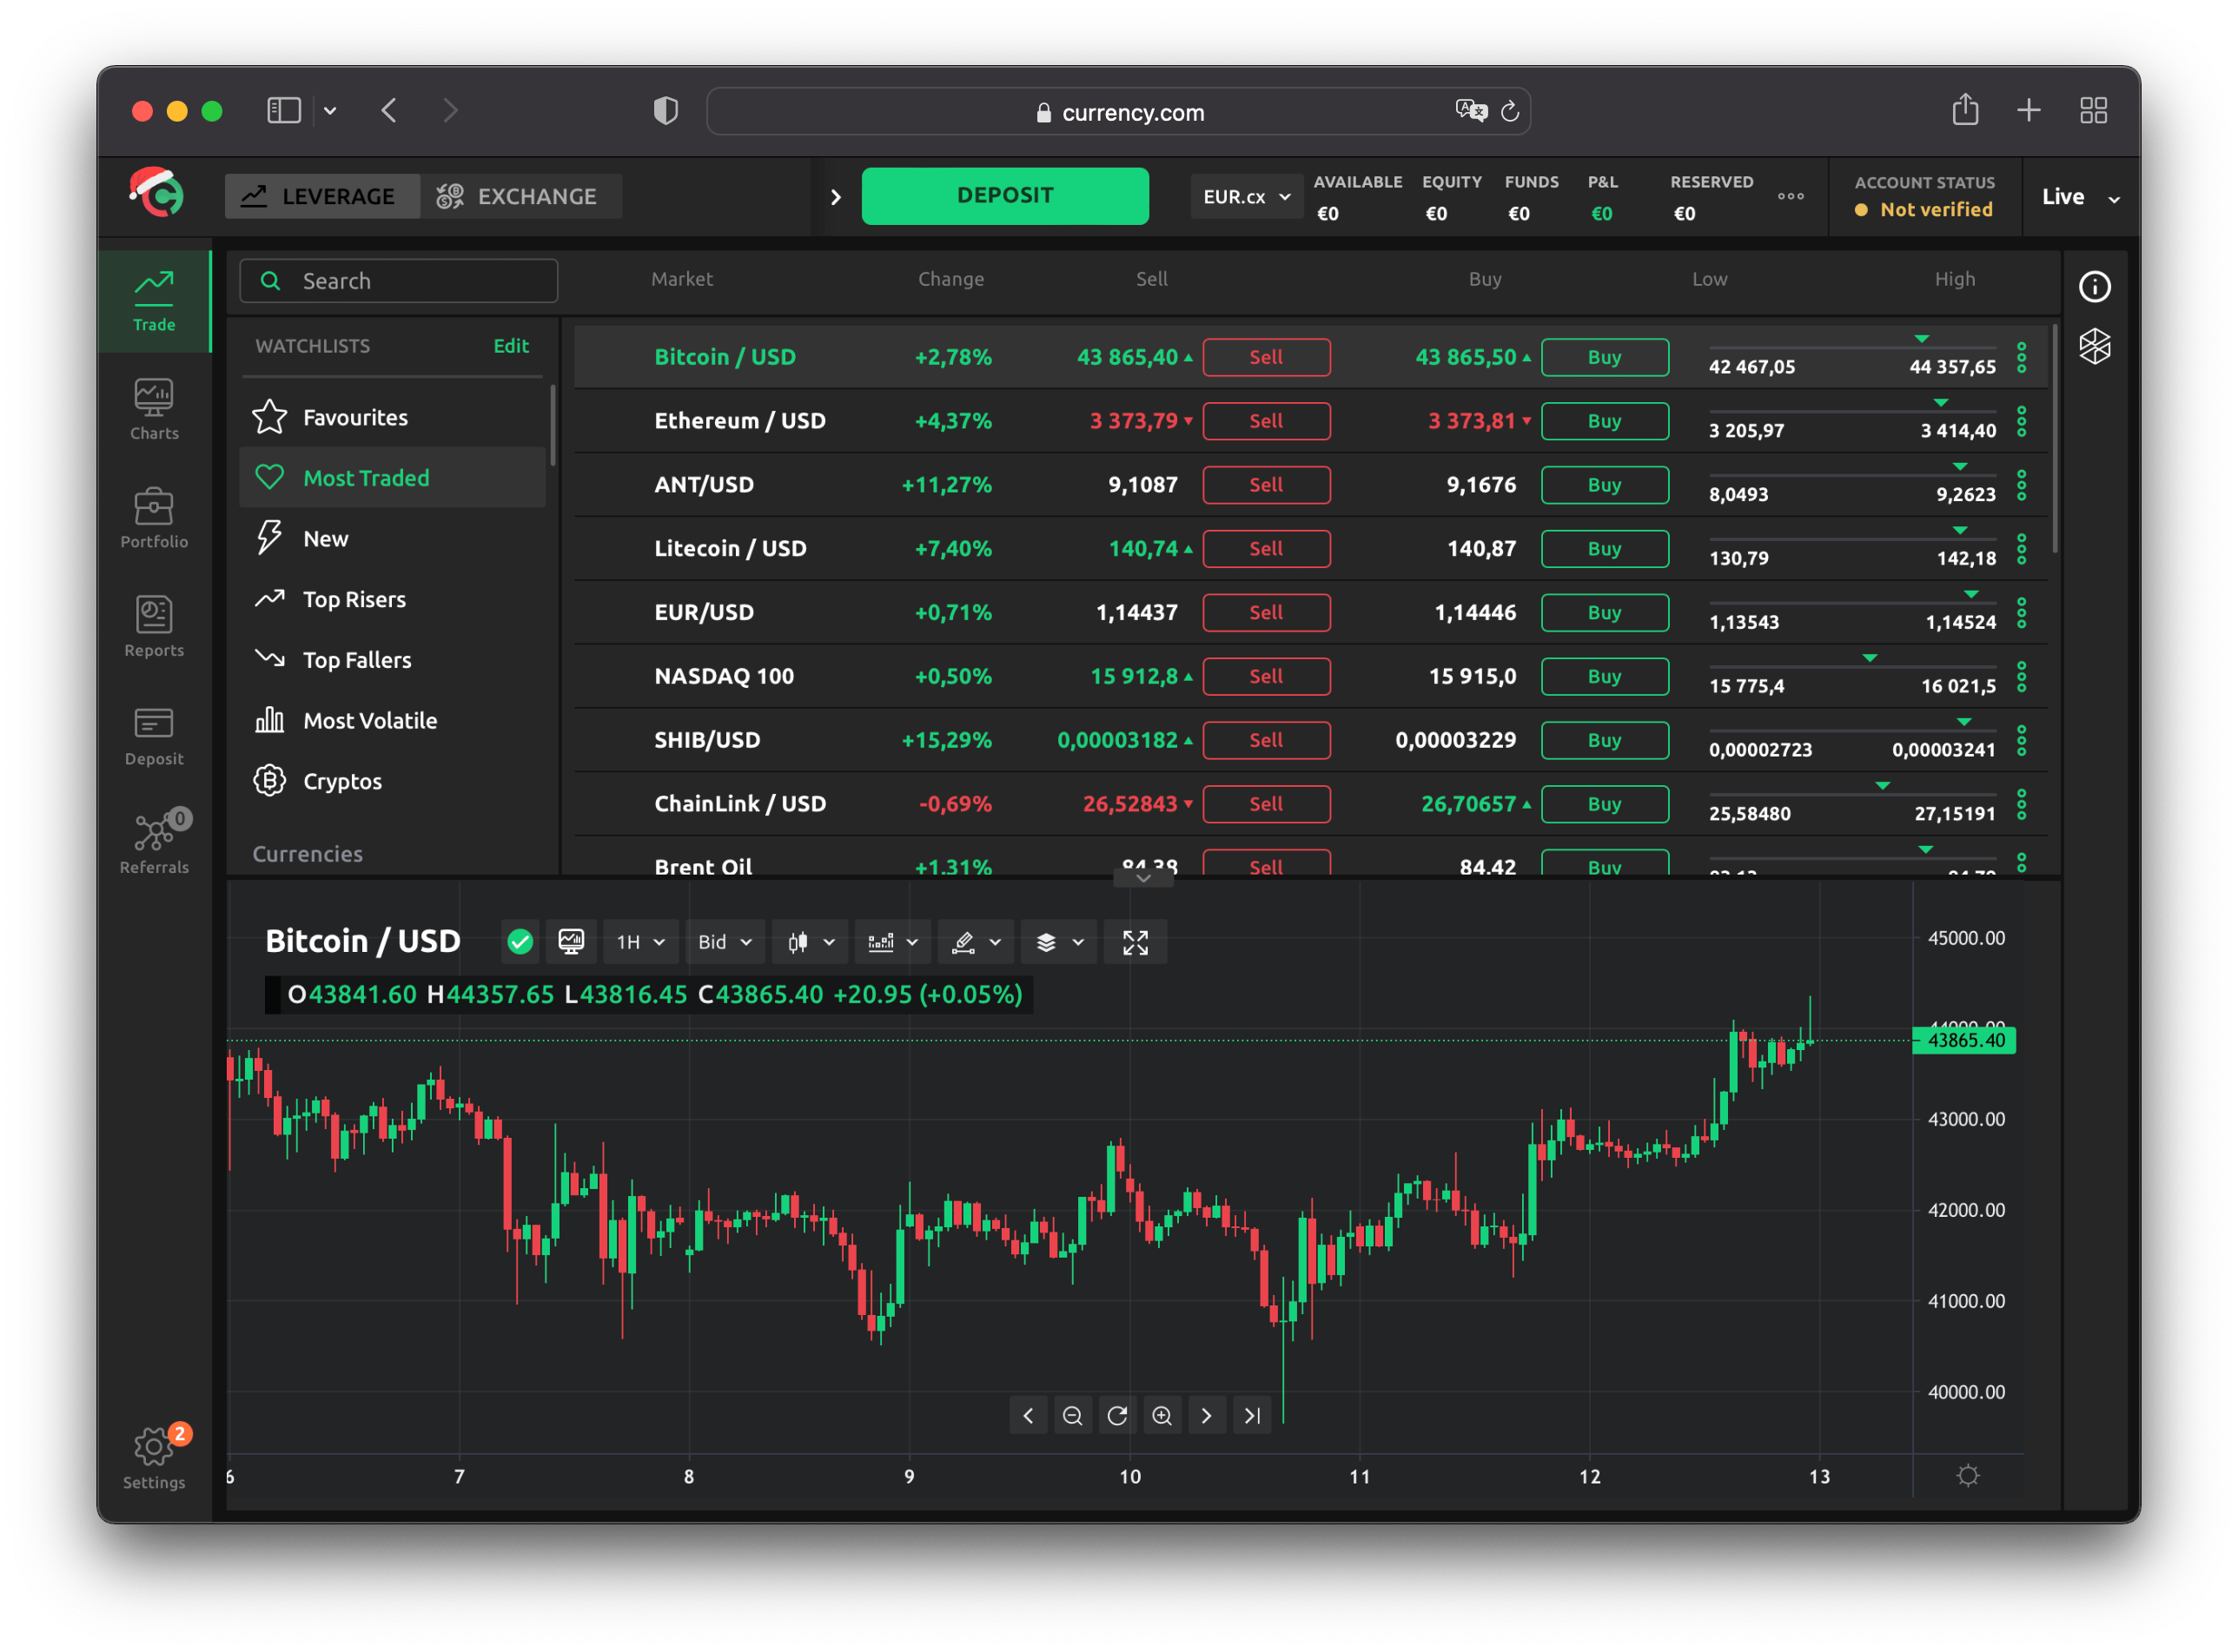 Dzengi.com Trading Platform